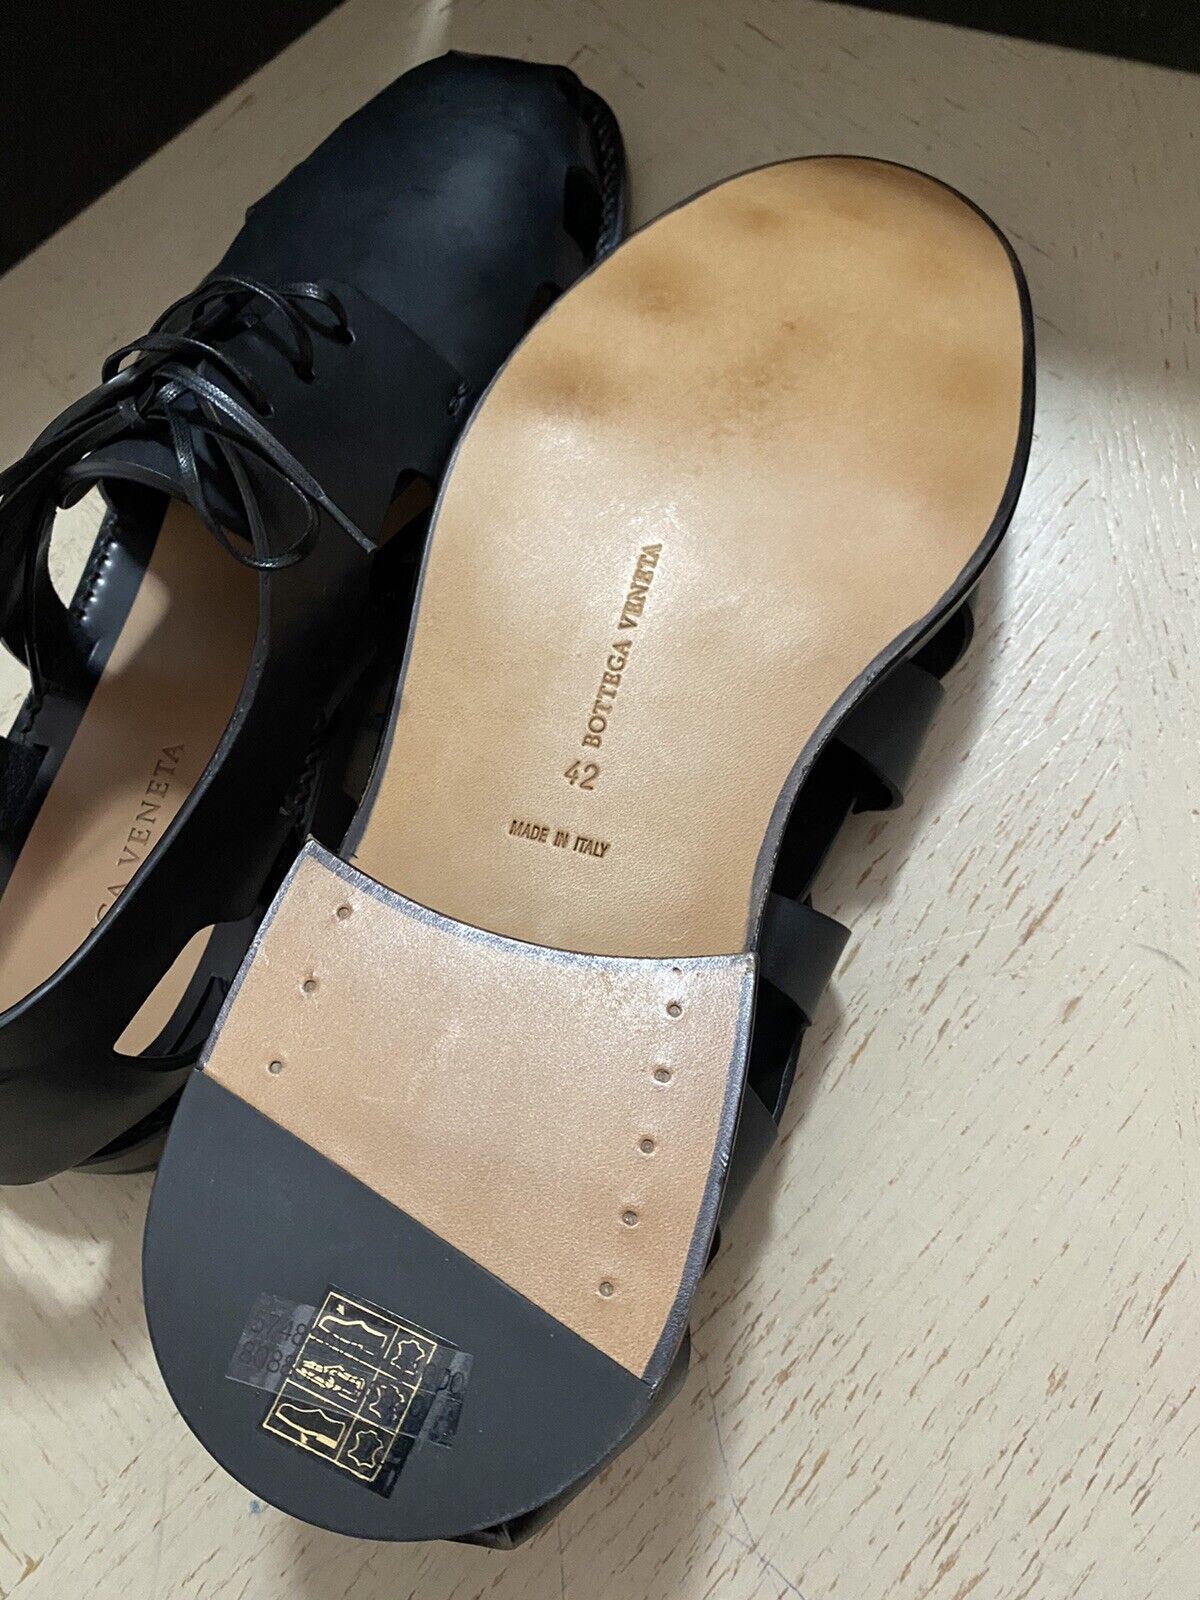 NIB $890 Bottega Veneta Men Leather Sandal Shoes DK Brown 9 US/42 Eu